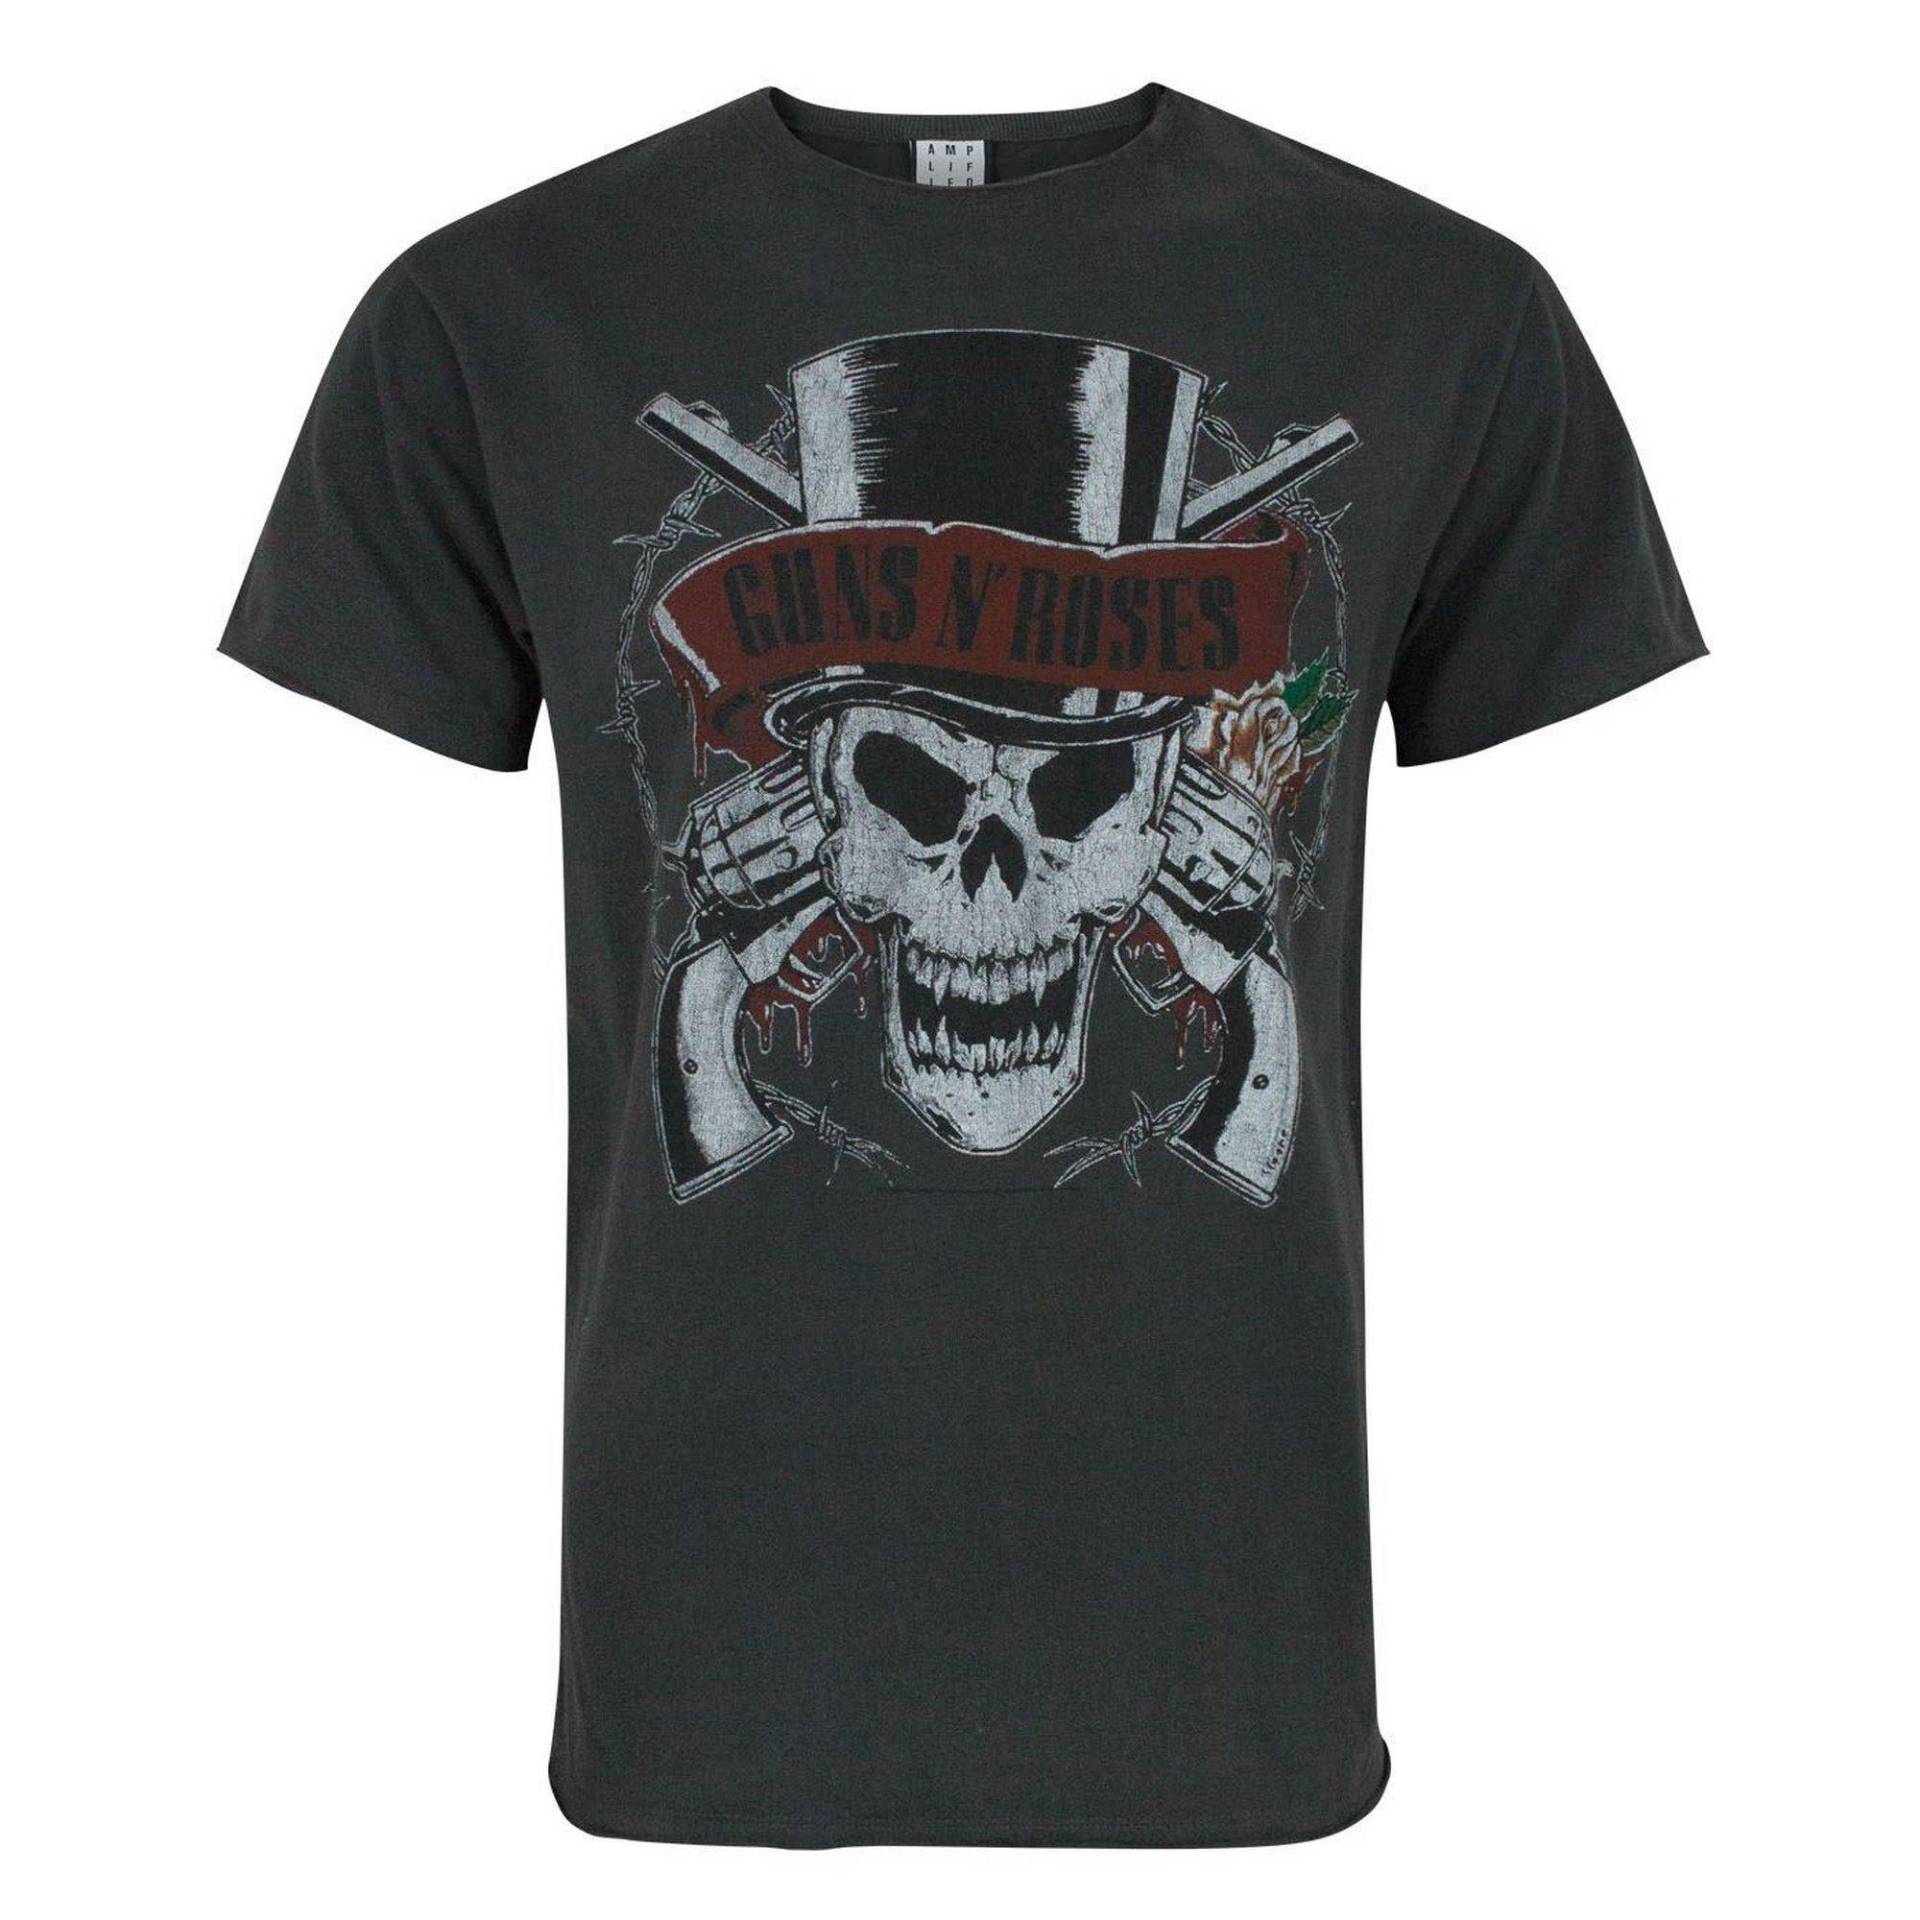 Guns N Roses Deaths Head T-shirt Herren Charcoal Black S von Amplified